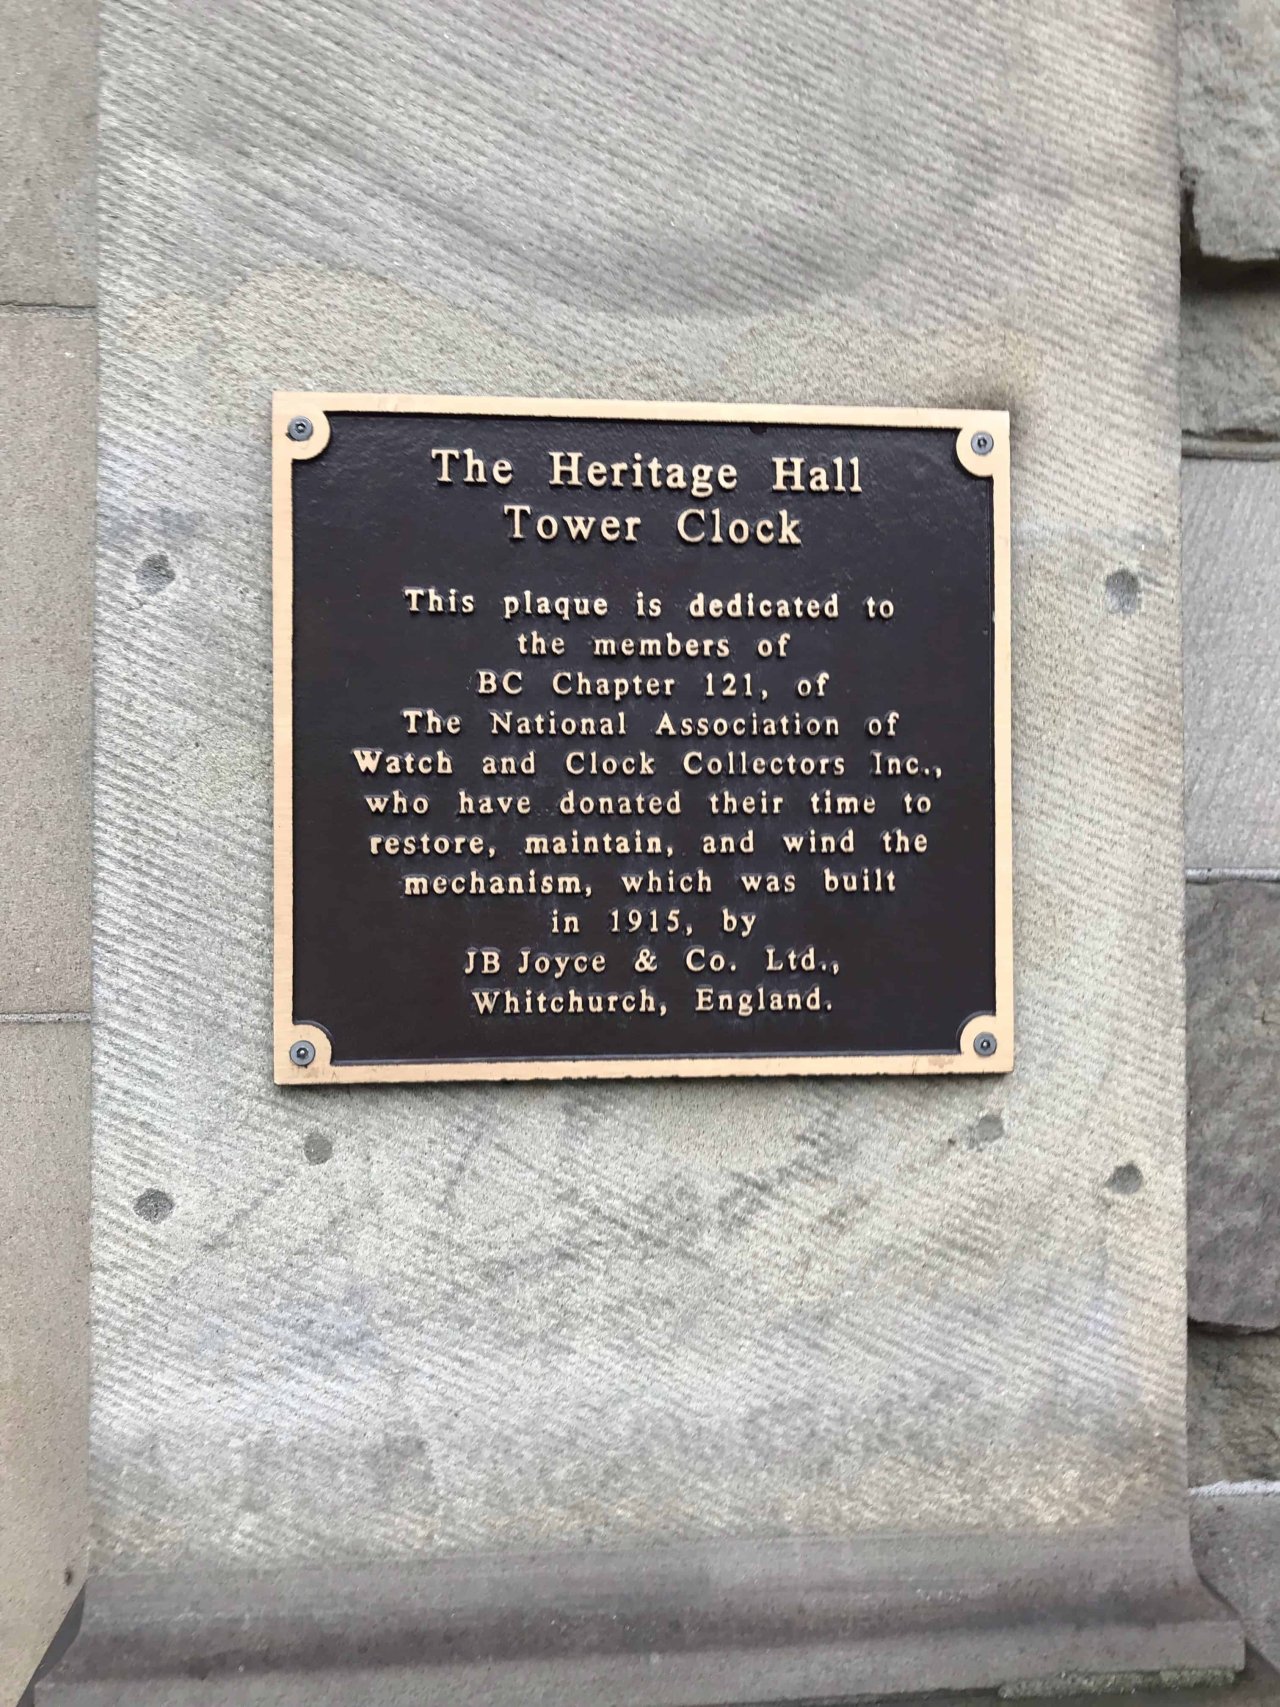 Heritage Hall Tower Clock Plaque. Credit: Jessica Quan